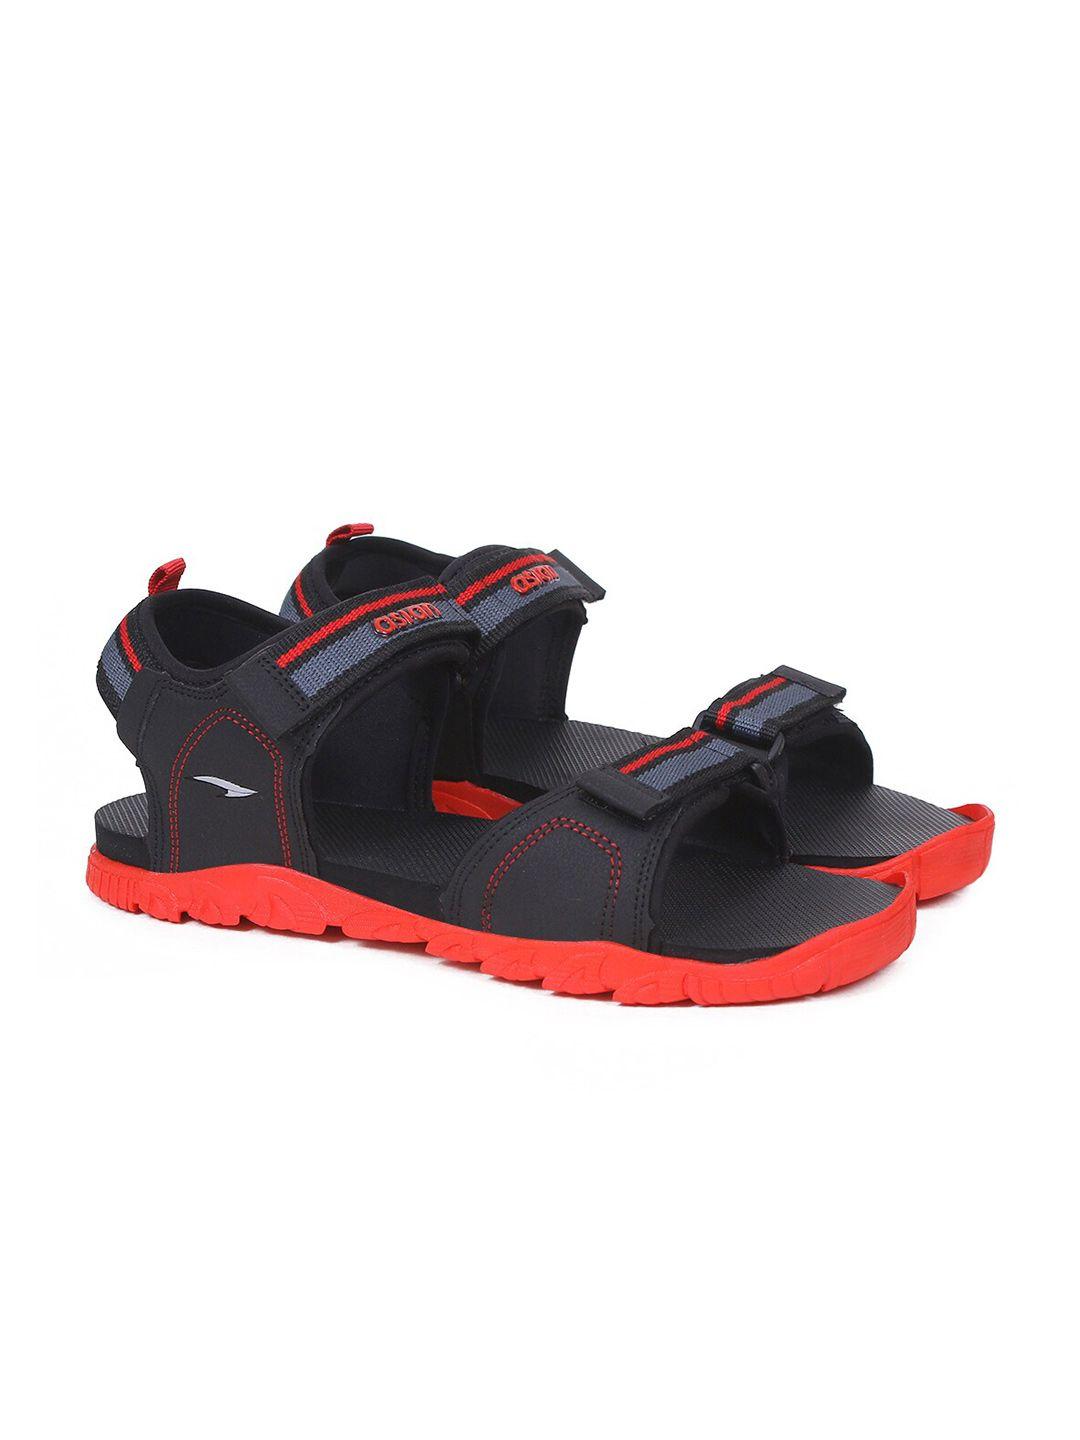 asian-men-black-&-red-sports-sandals